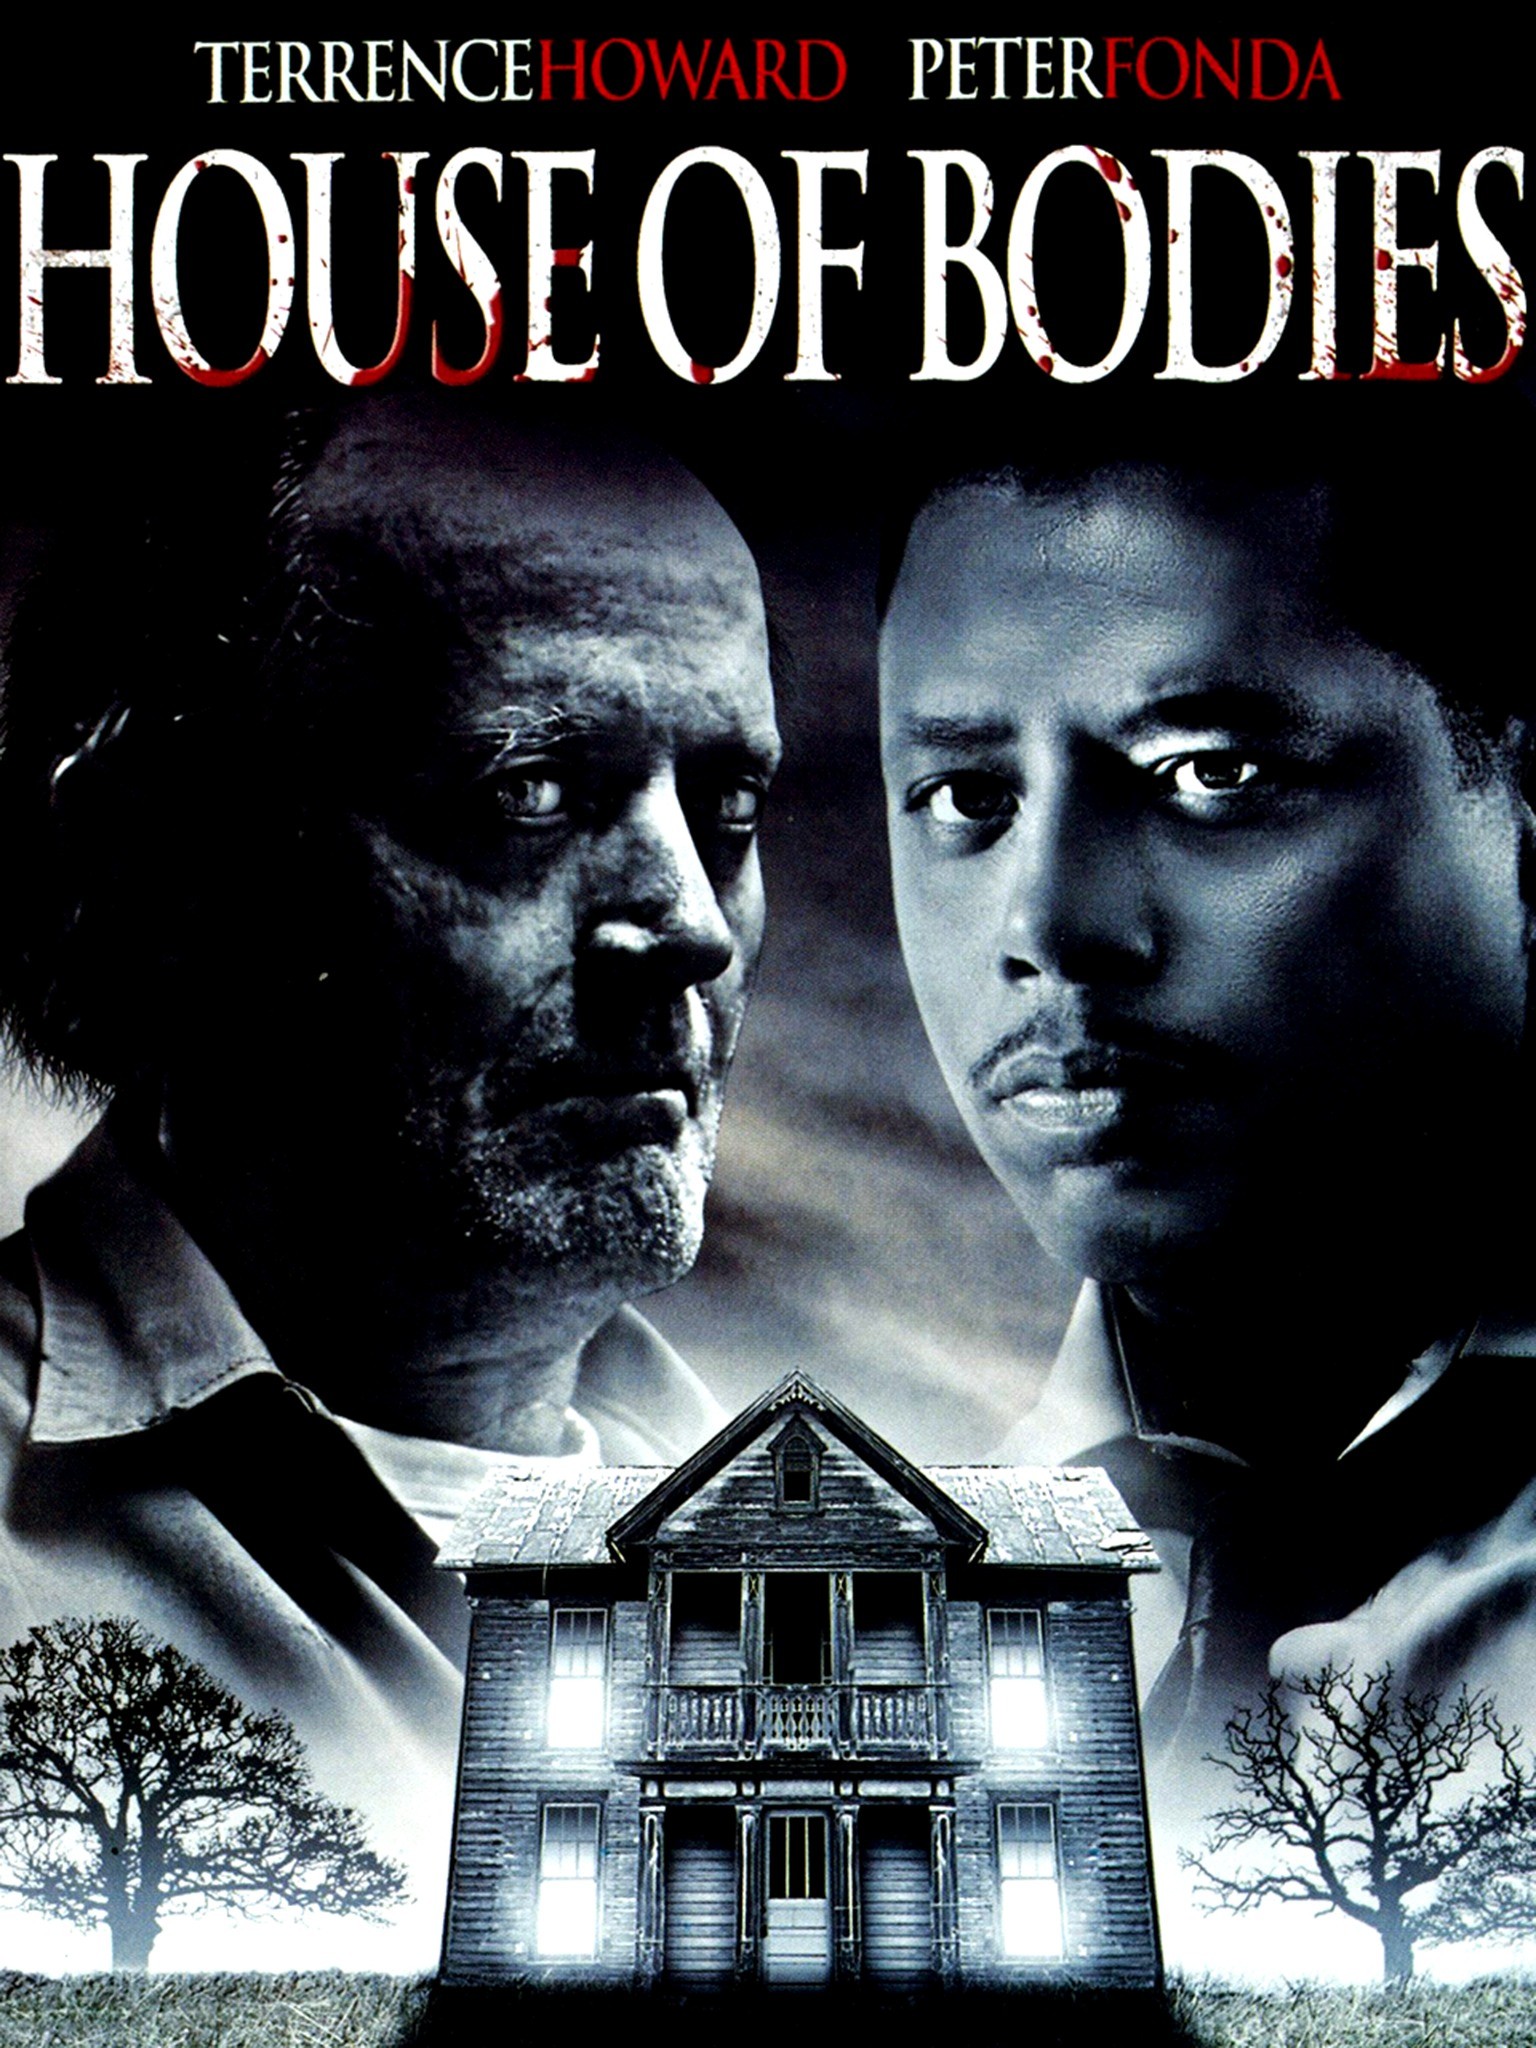 Bodies Bodies Bodies - Rotten Tomatoes